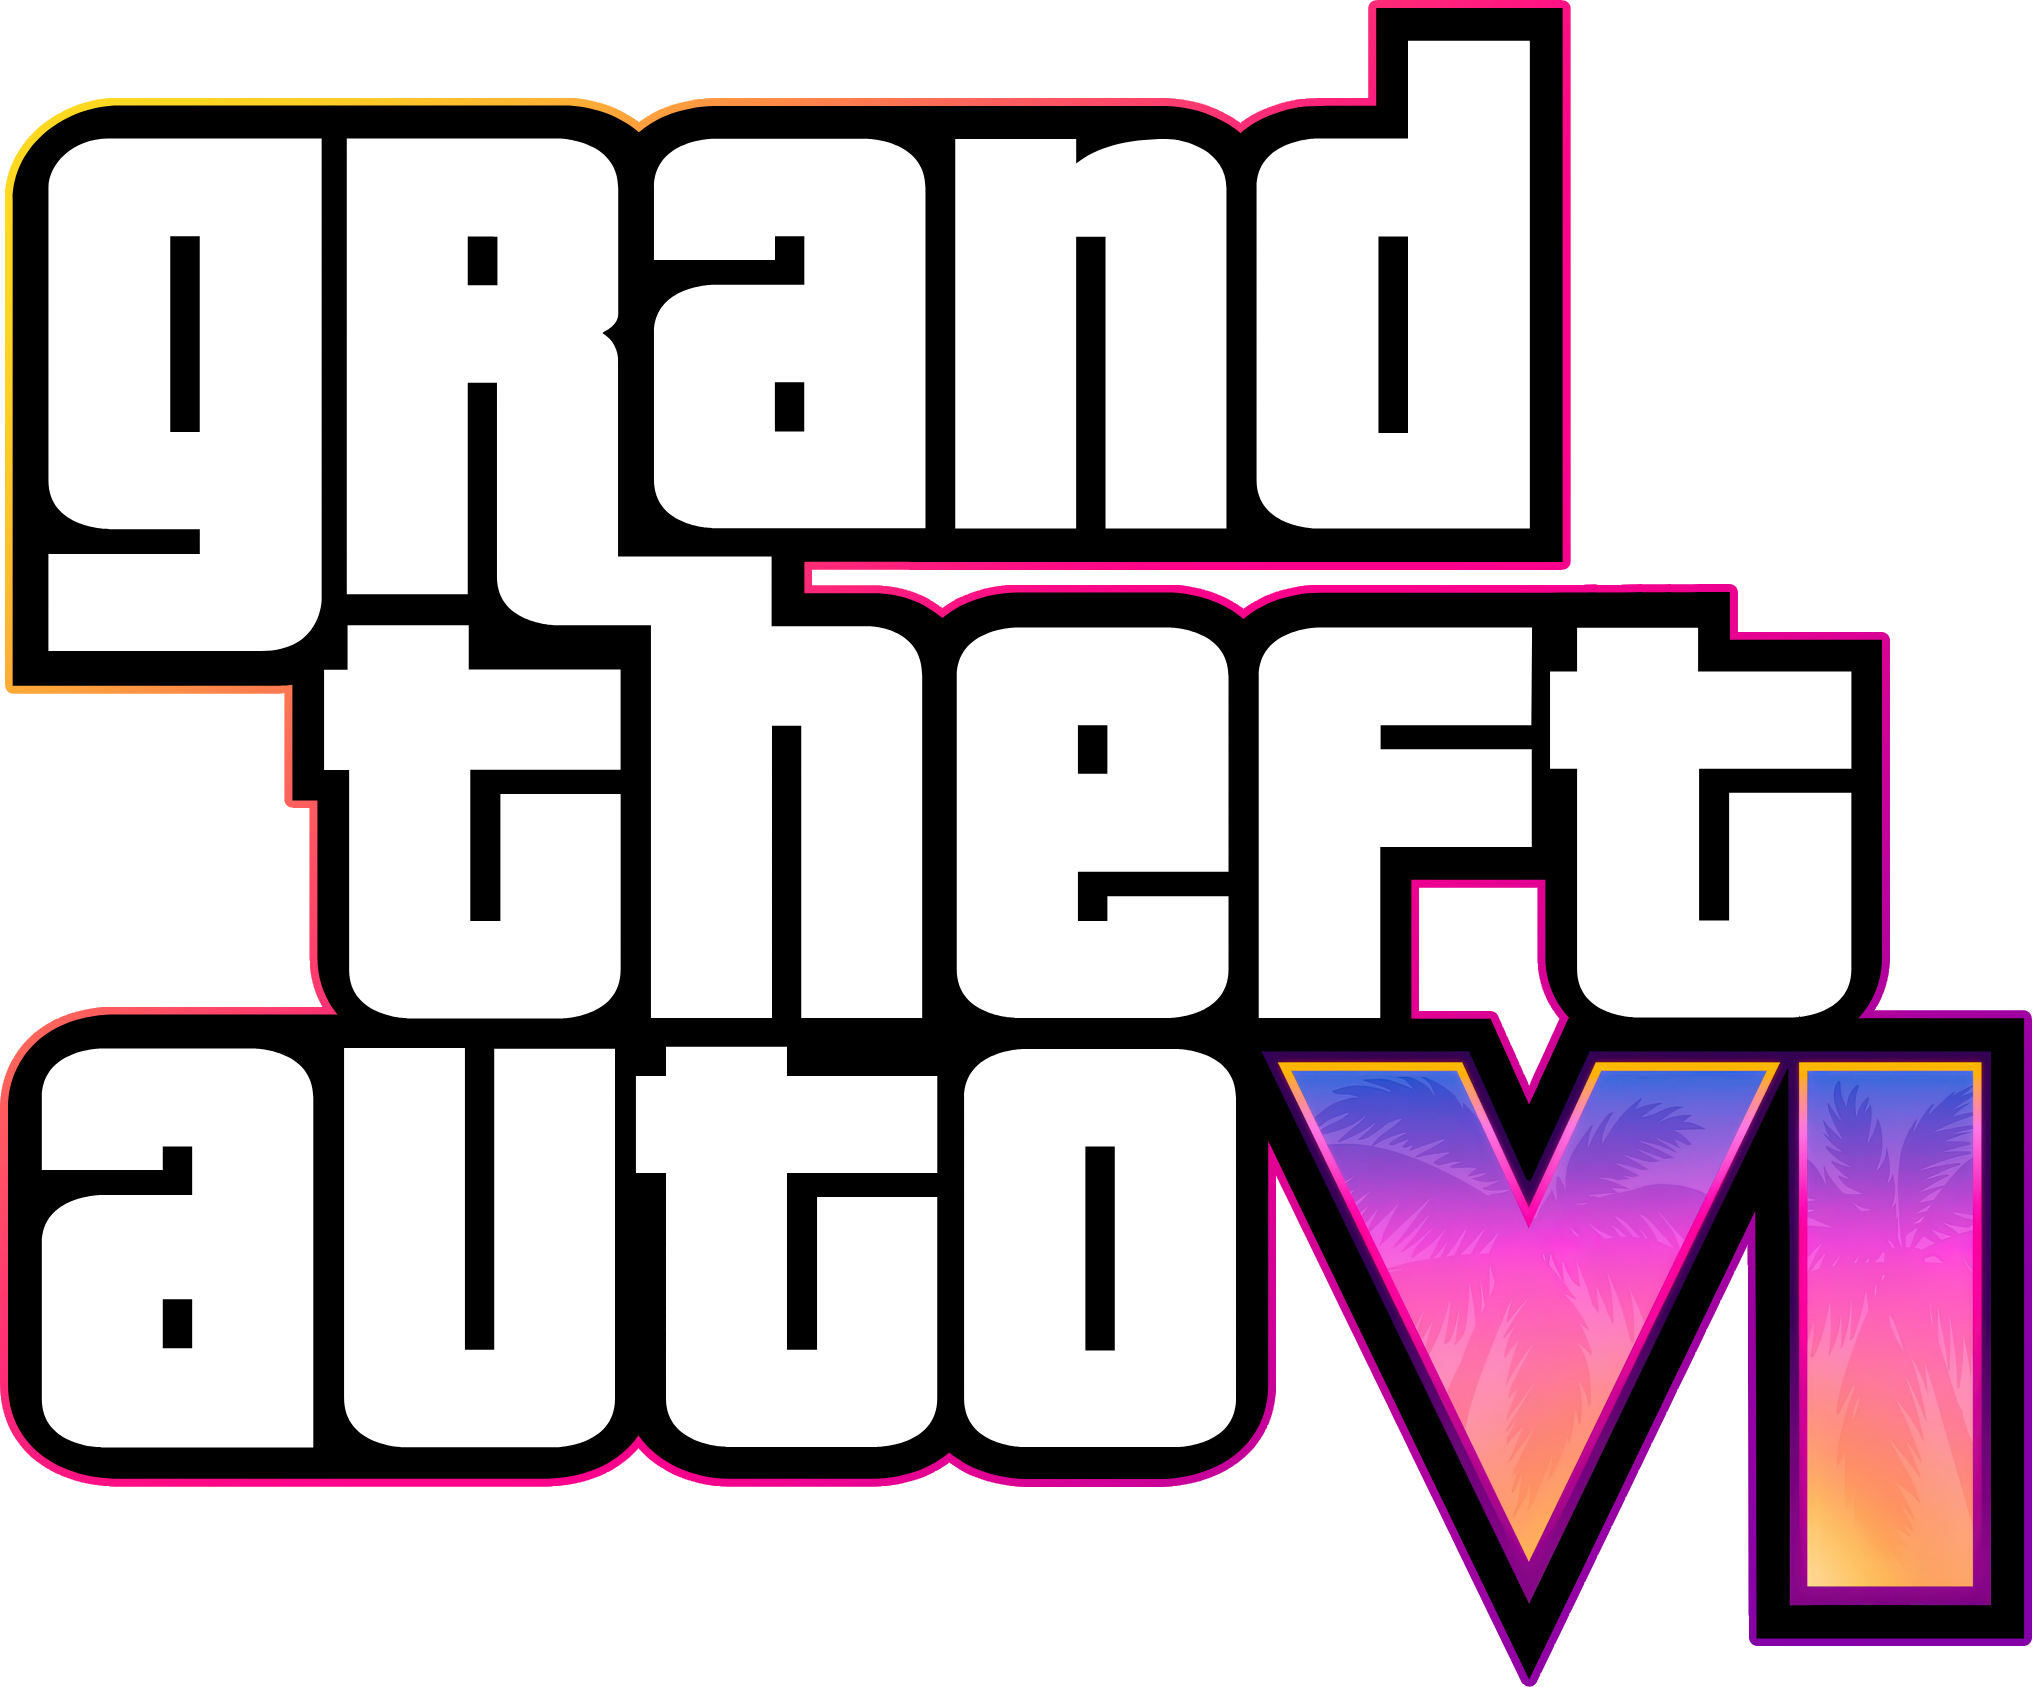 Grand Theft Auto IV · Grand Theft Auto IV Trailer (App 5152) · SteamDB